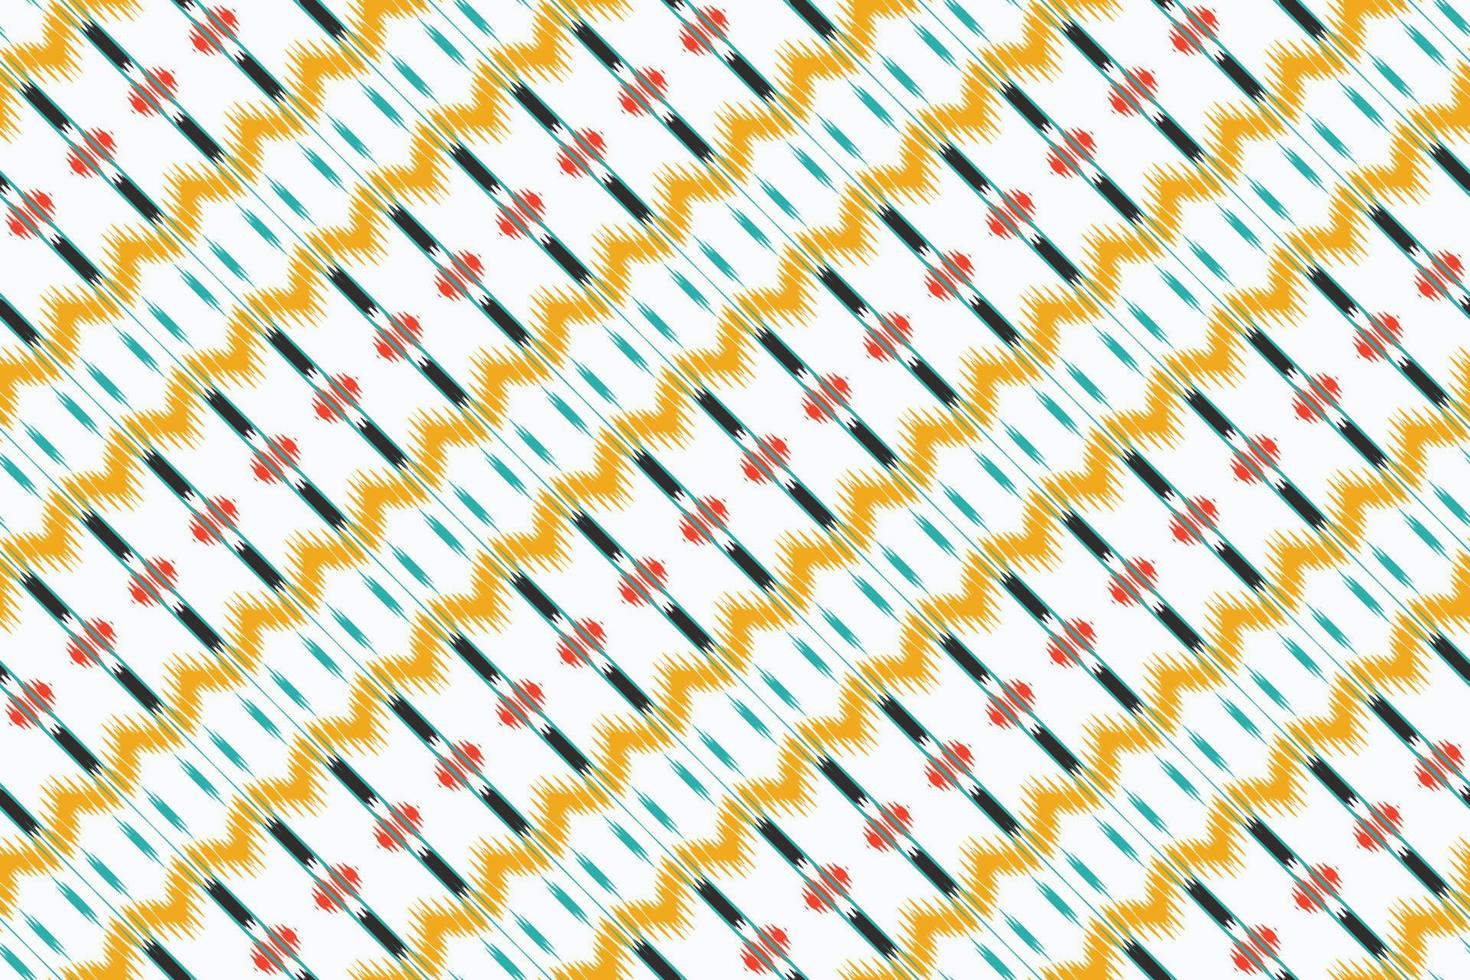 ikat puntos patrón sin fisuras de chevron tribal. étnico geométrico batik ikkat vector digital diseño textil para estampados tela sari mogol cepillo símbolo franjas textura kurti kurtis kurtas